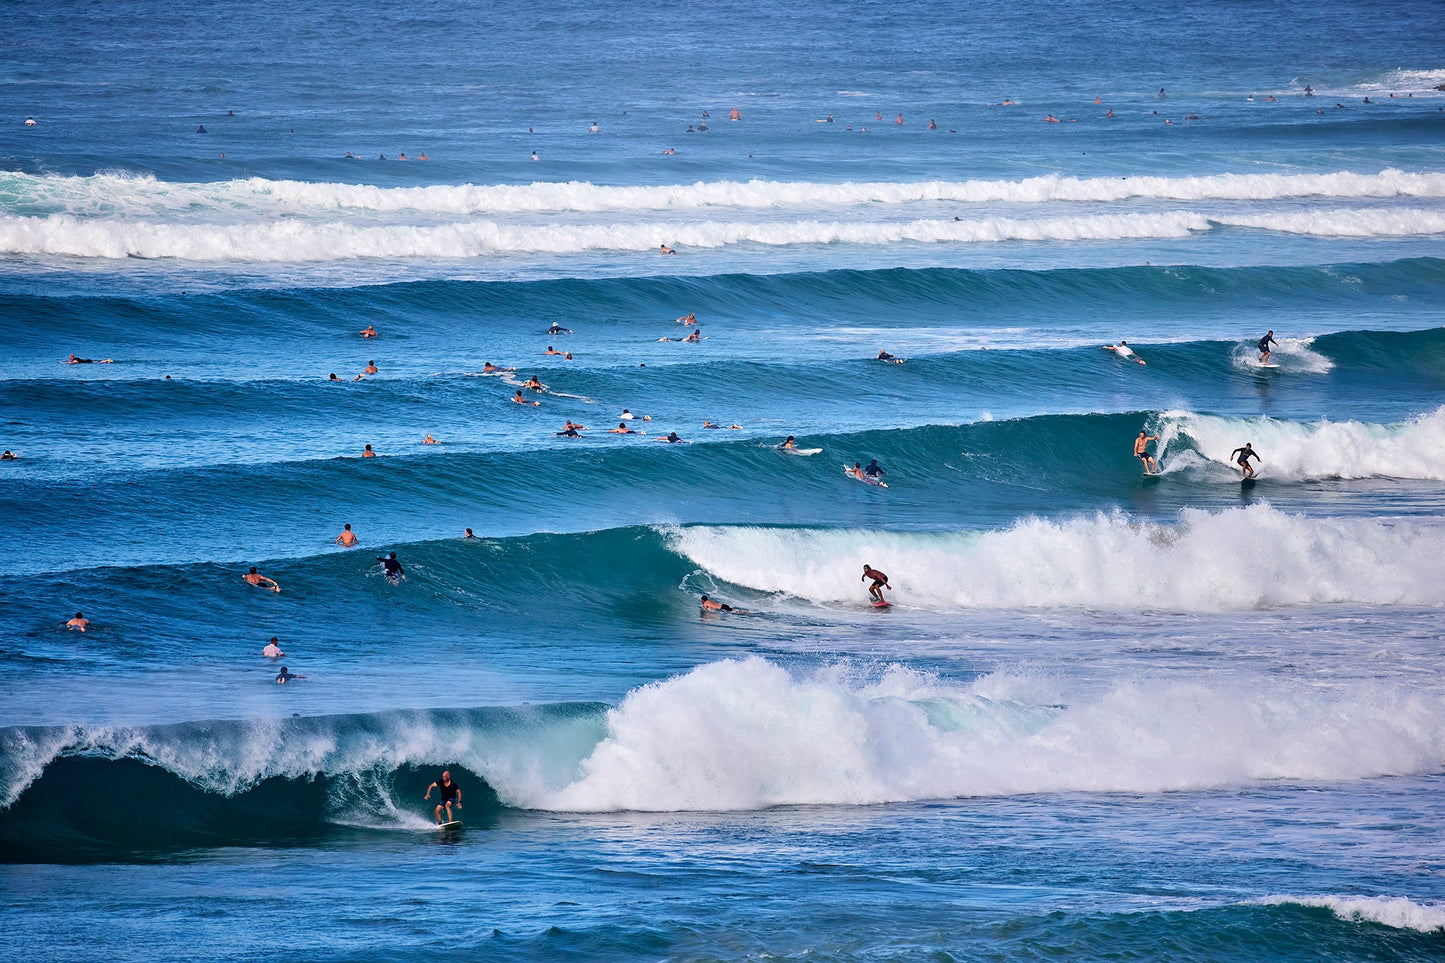 The lineup - Surfers at Snapper Rocks, Coolangatta Gold Coast